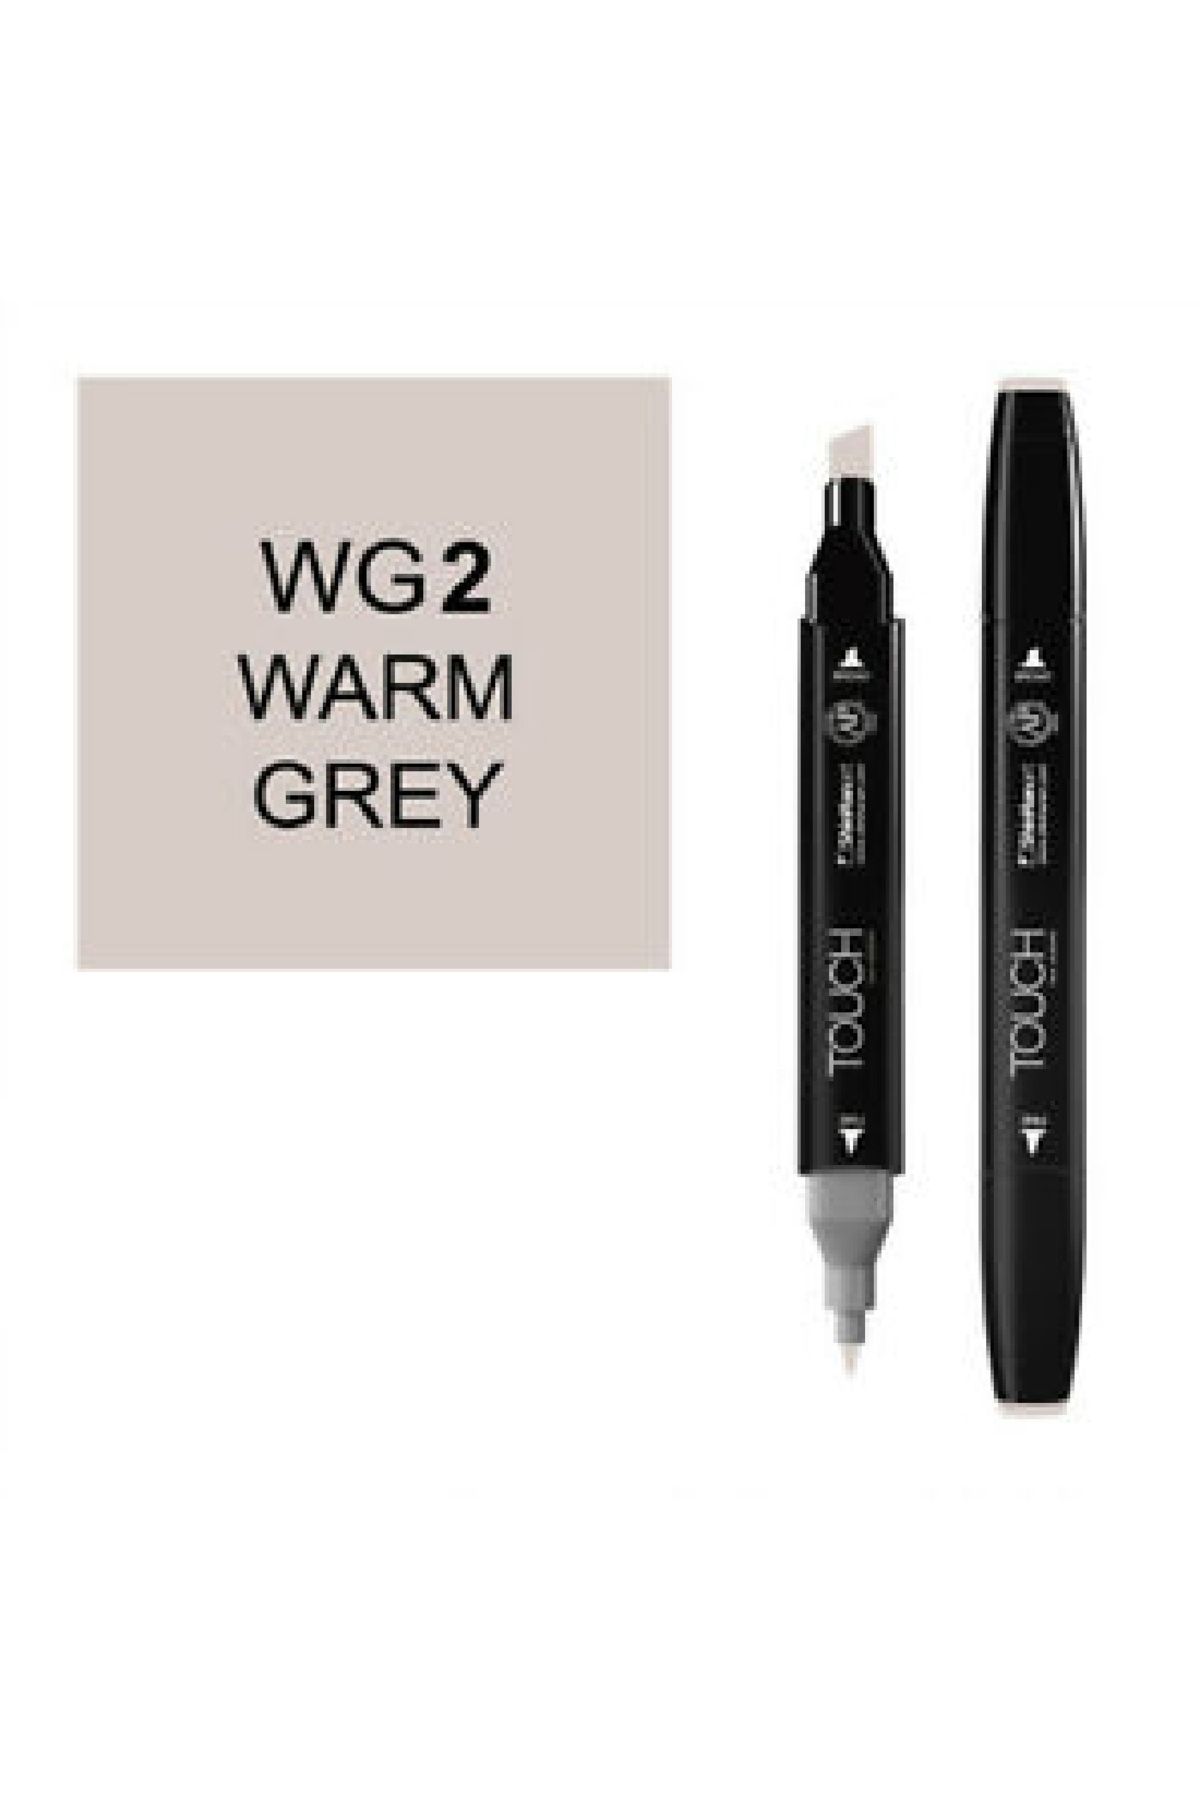 Ponart Touch Twin Wg2 Warm Grey Marker Sh1111020